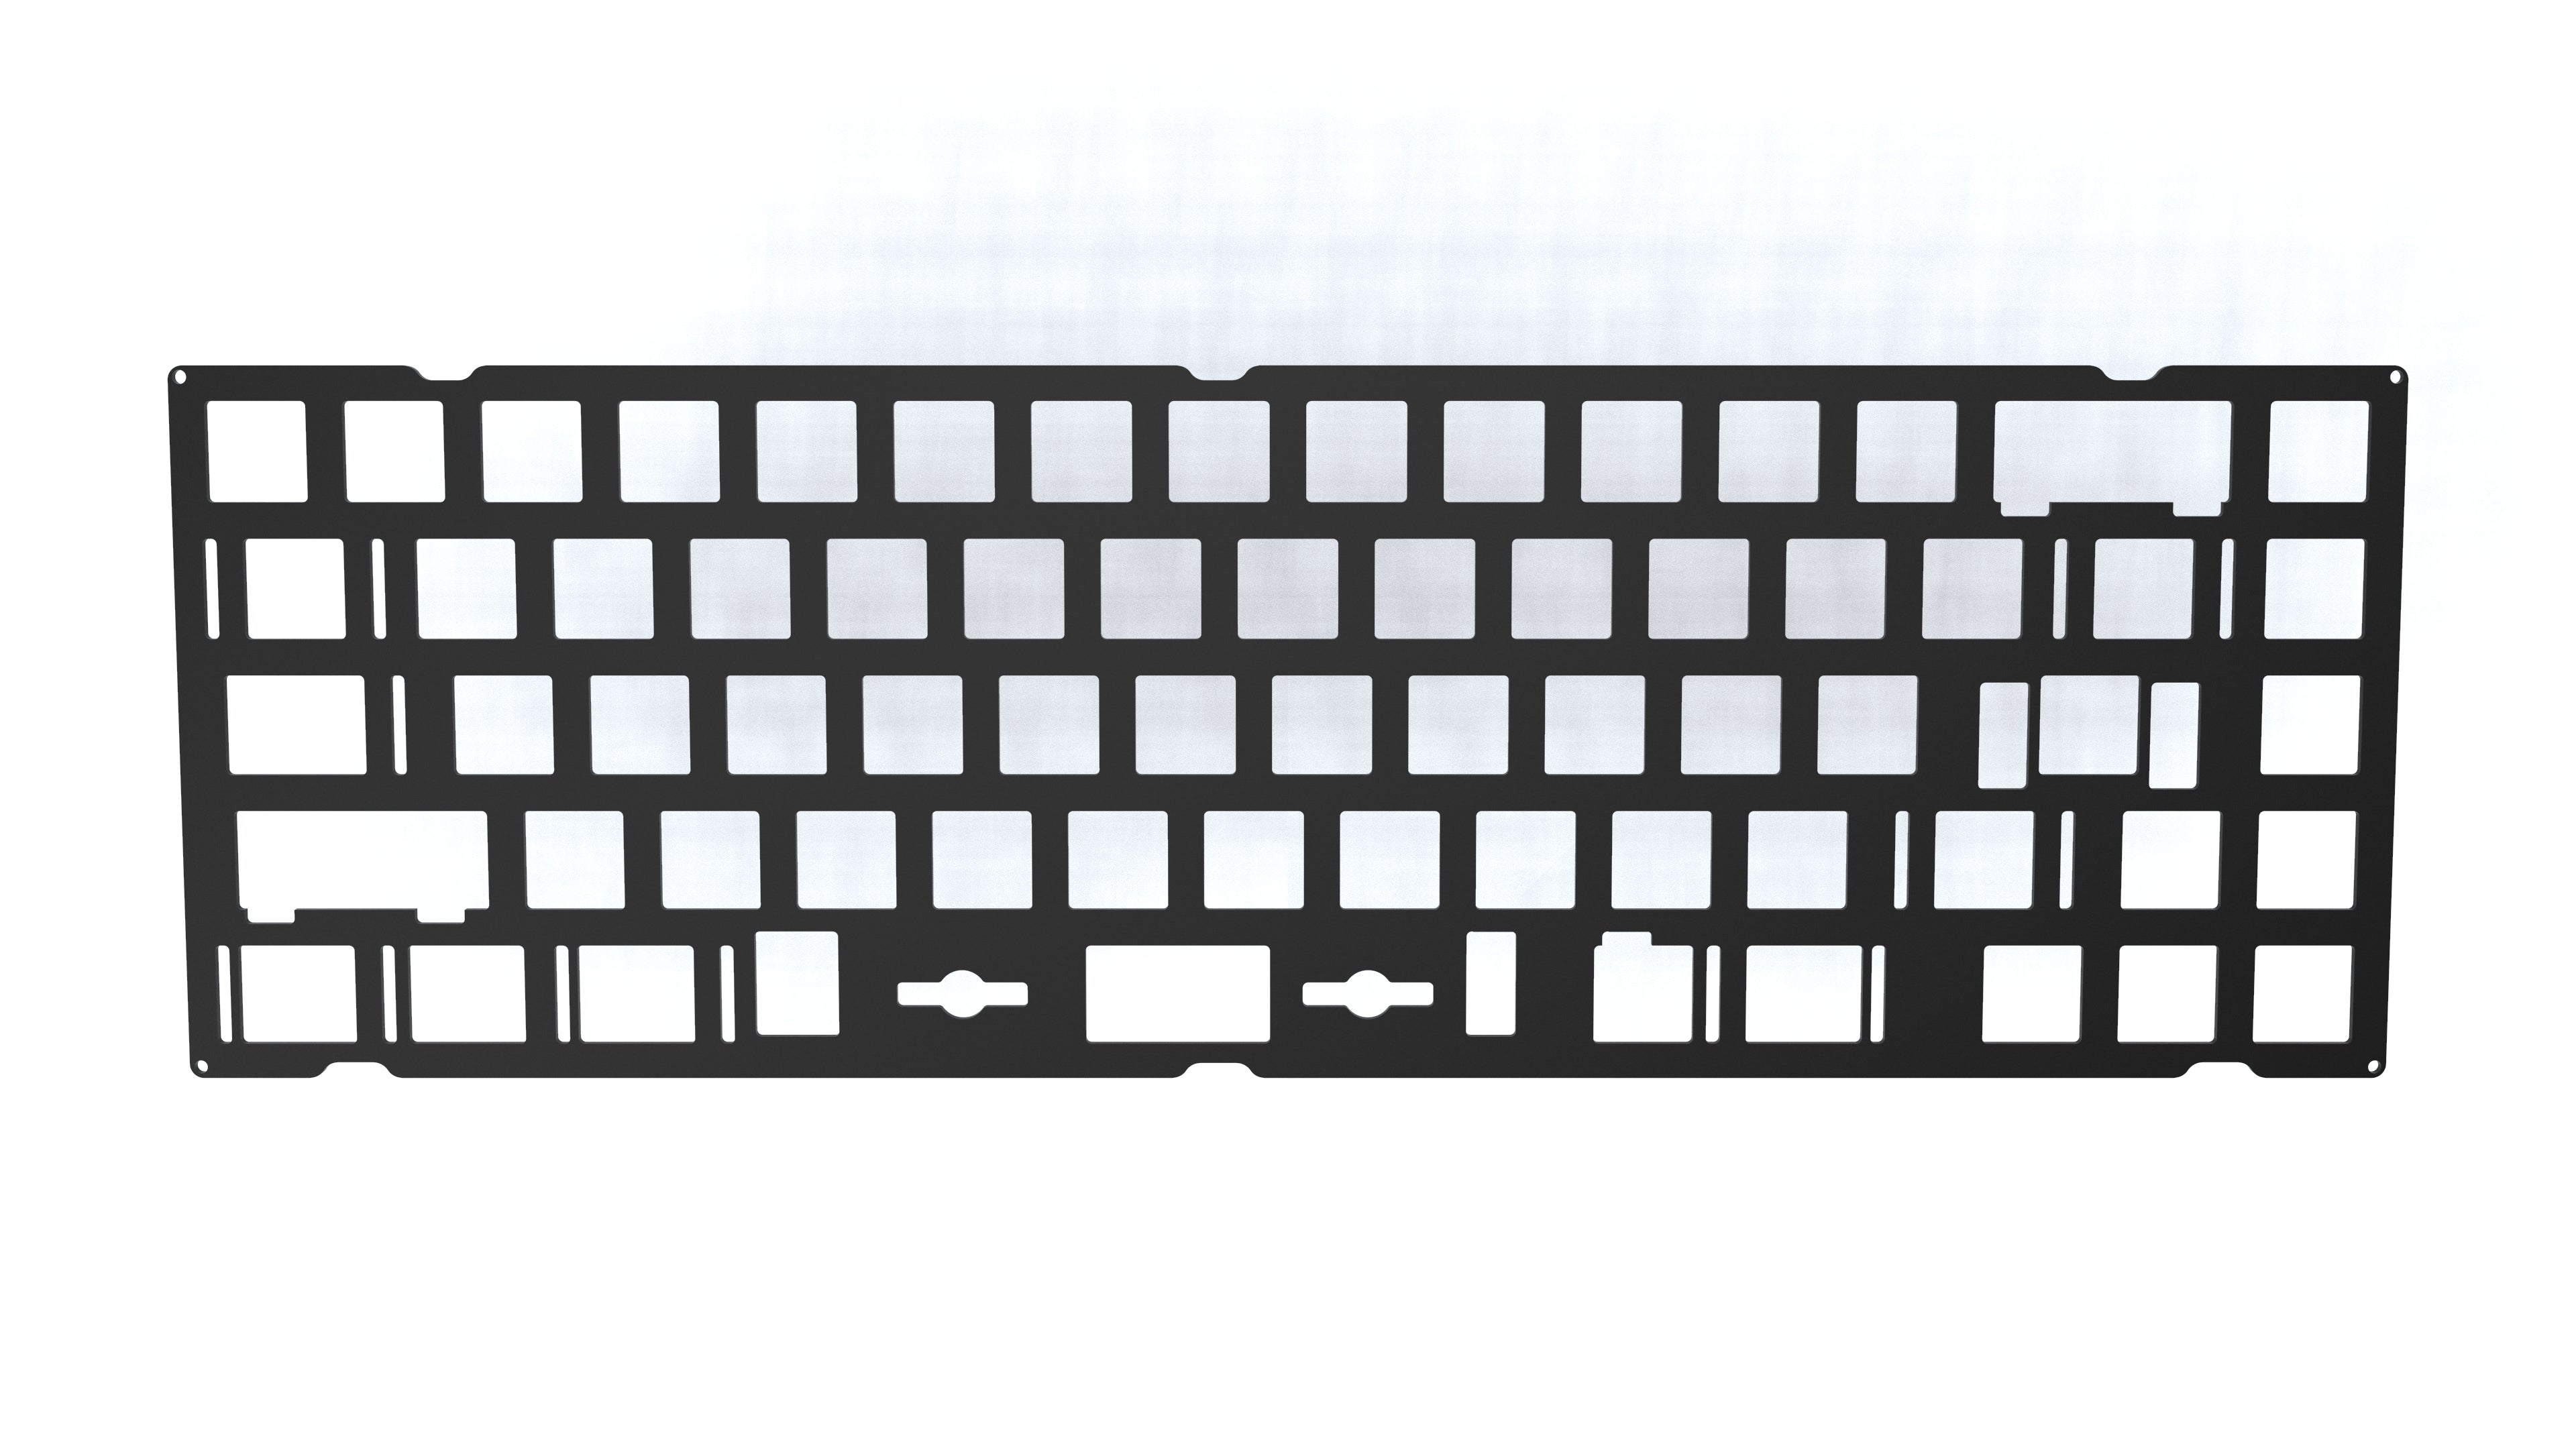 Angel 65% Keyboard